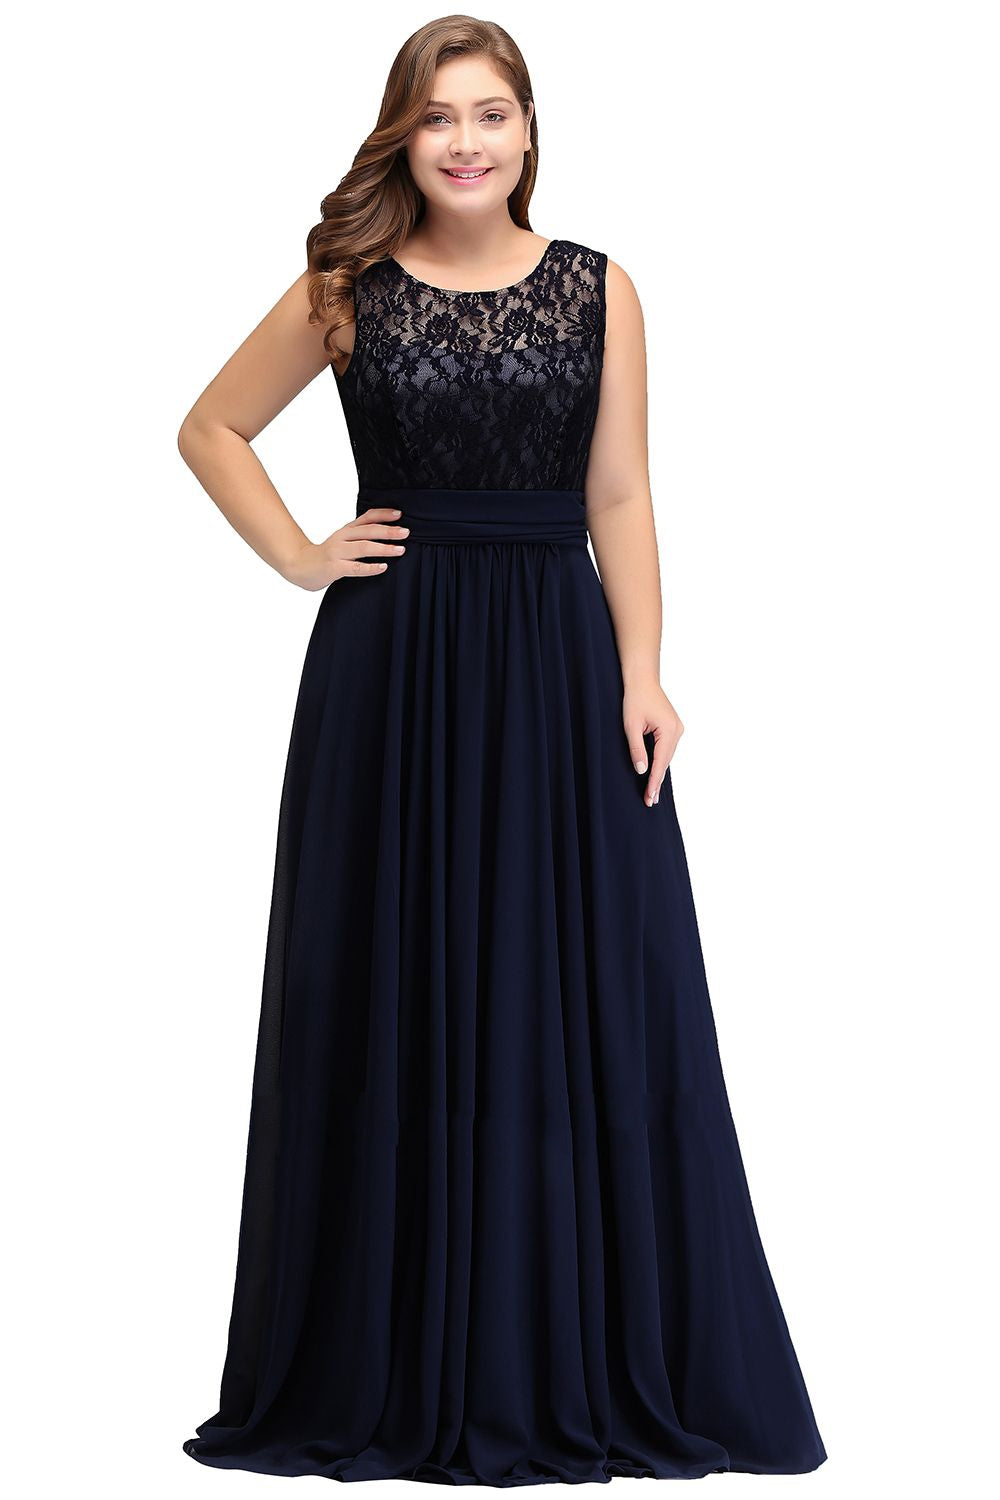 Navy Blue Long Lace Plus Size Bridesmaid Dress BPPBD006